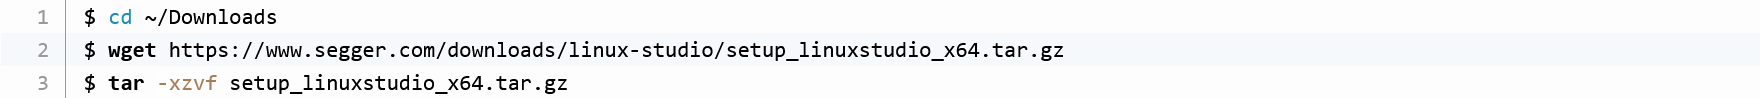 Linux Studio Code